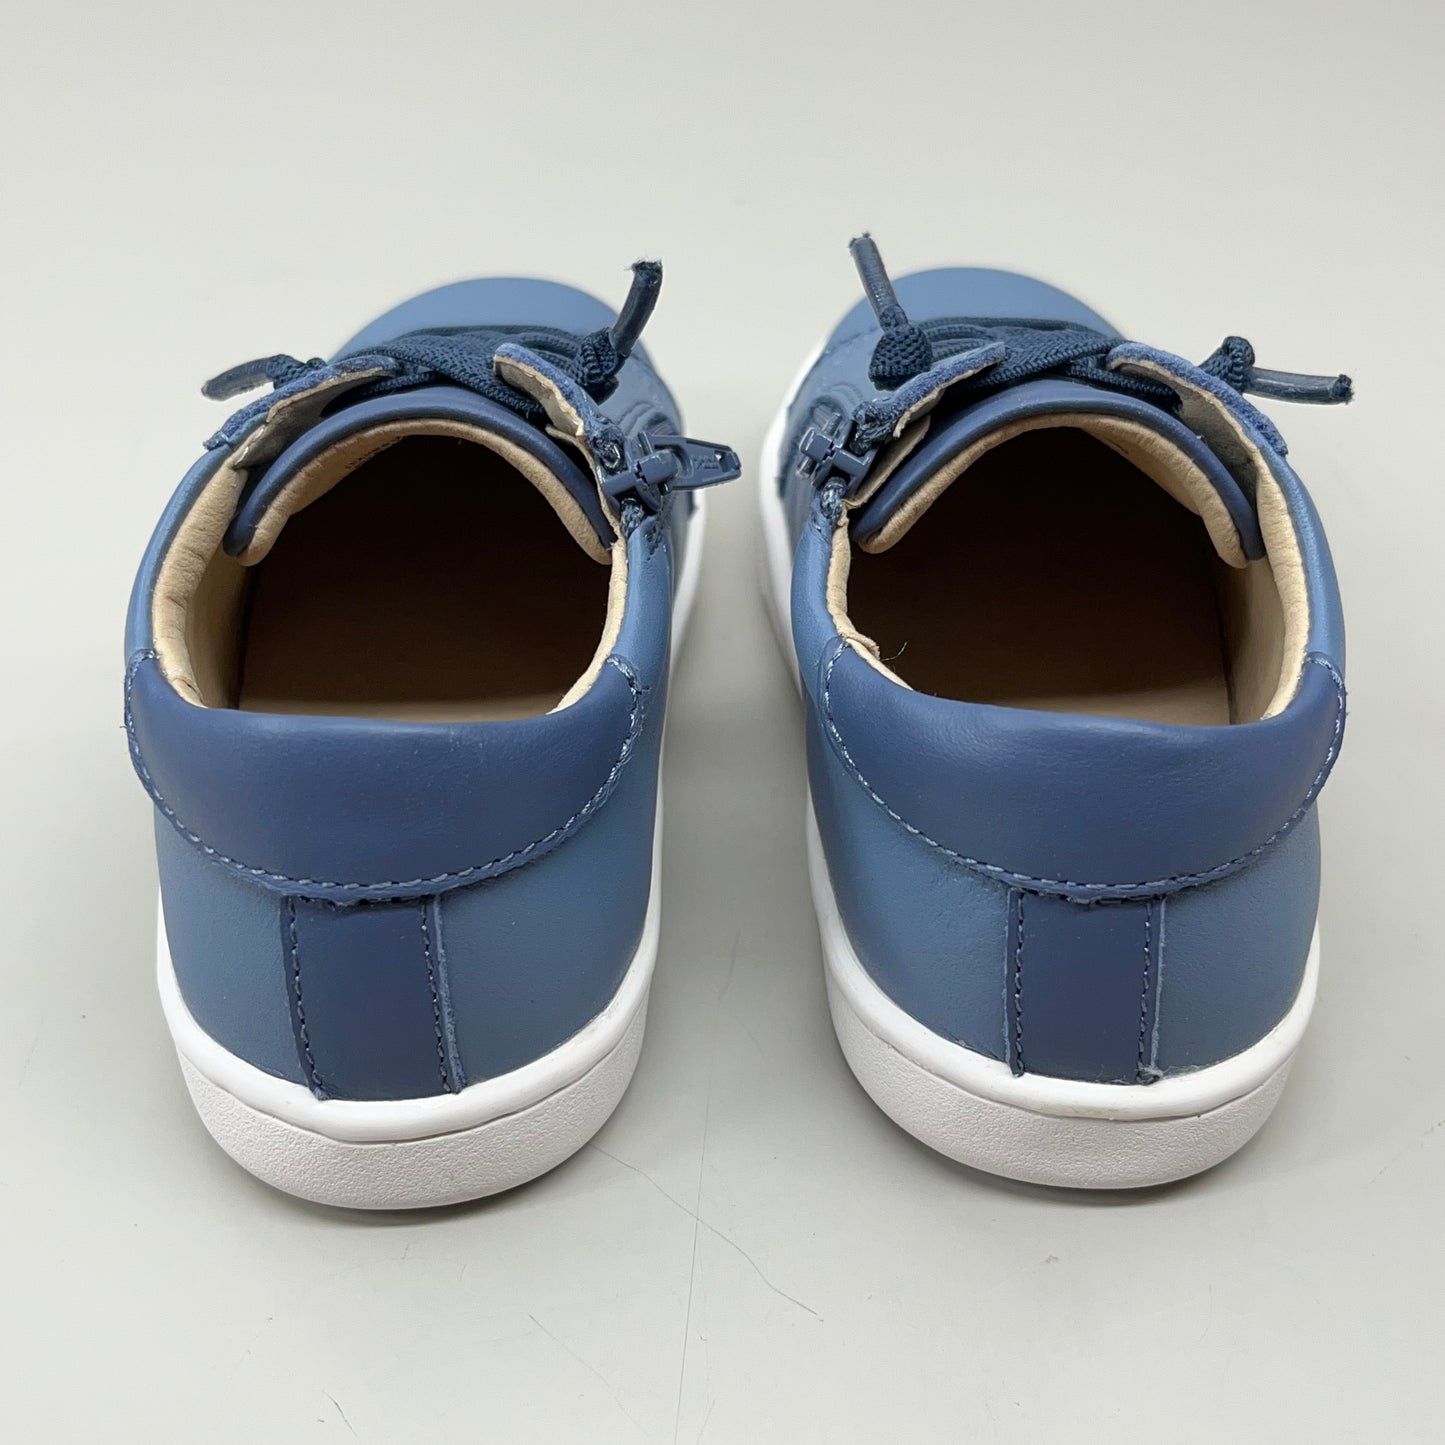 OLD SOLES Comet Runner Sneakers Kid's Sz 33 US 1.5 Indigo/Petrol/Cream #6149